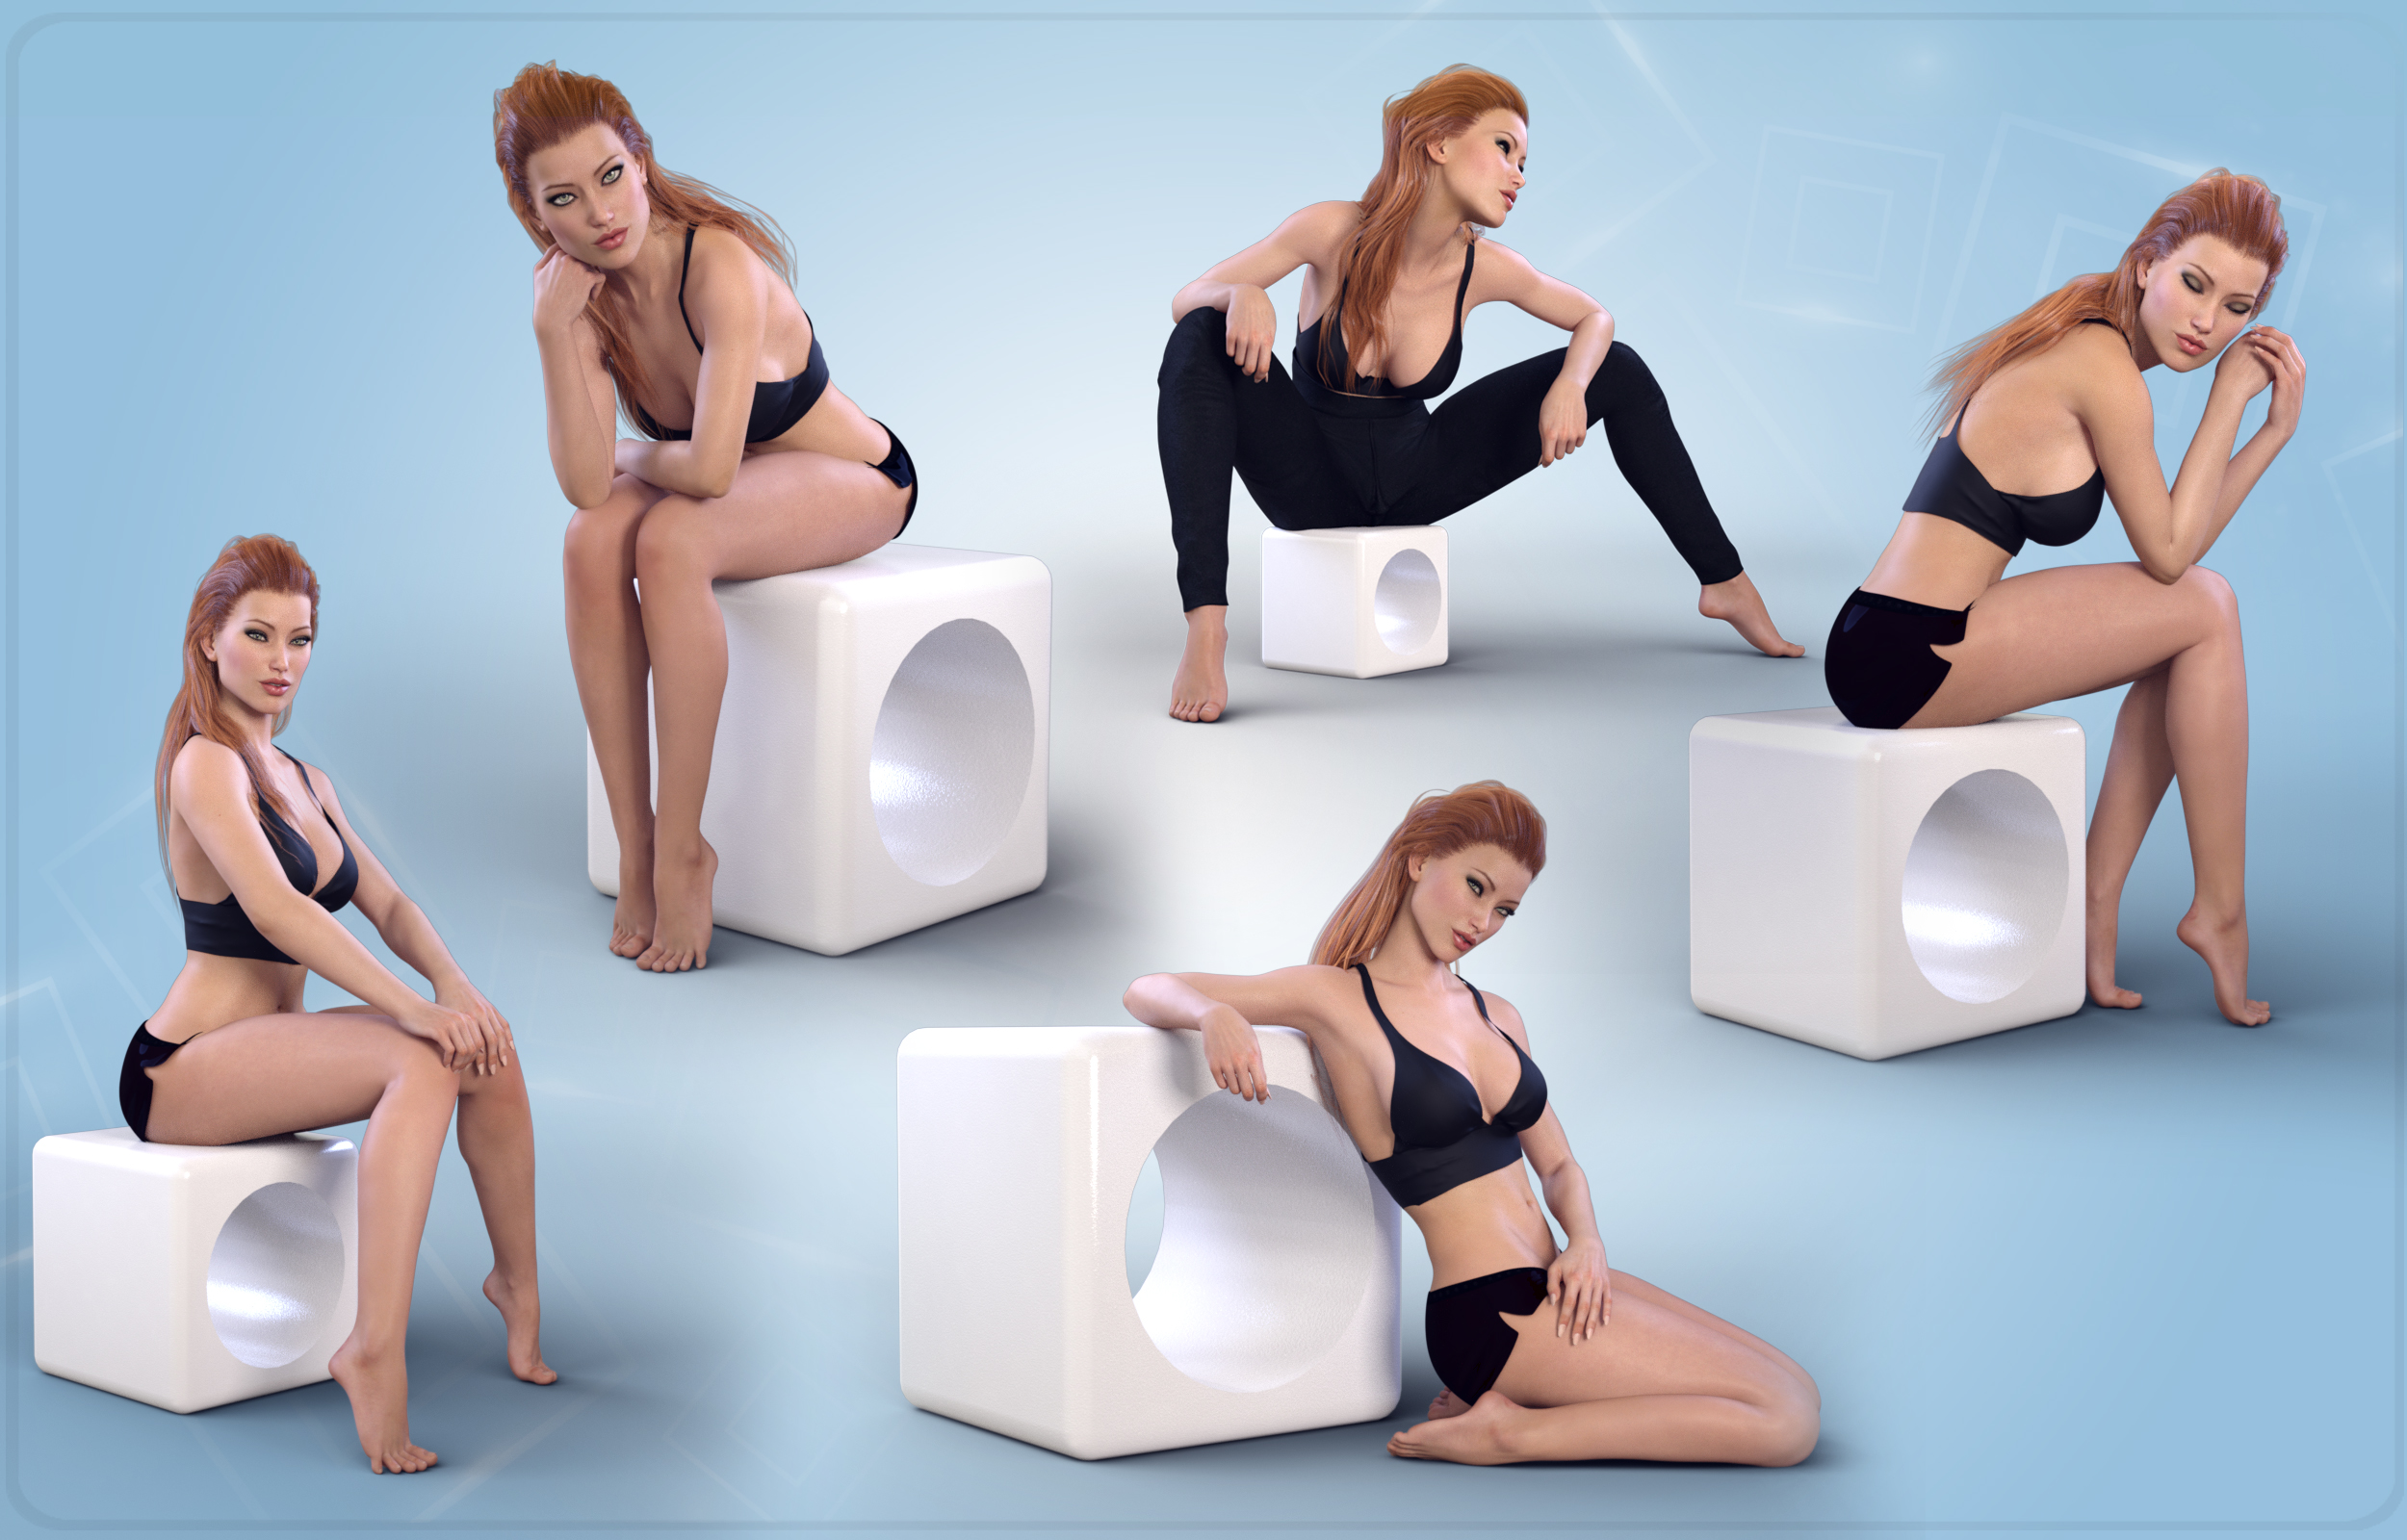 Z Sitting - Poses for Genesis 3 Female by: Zeddicuss, 3D Models by Daz 3D